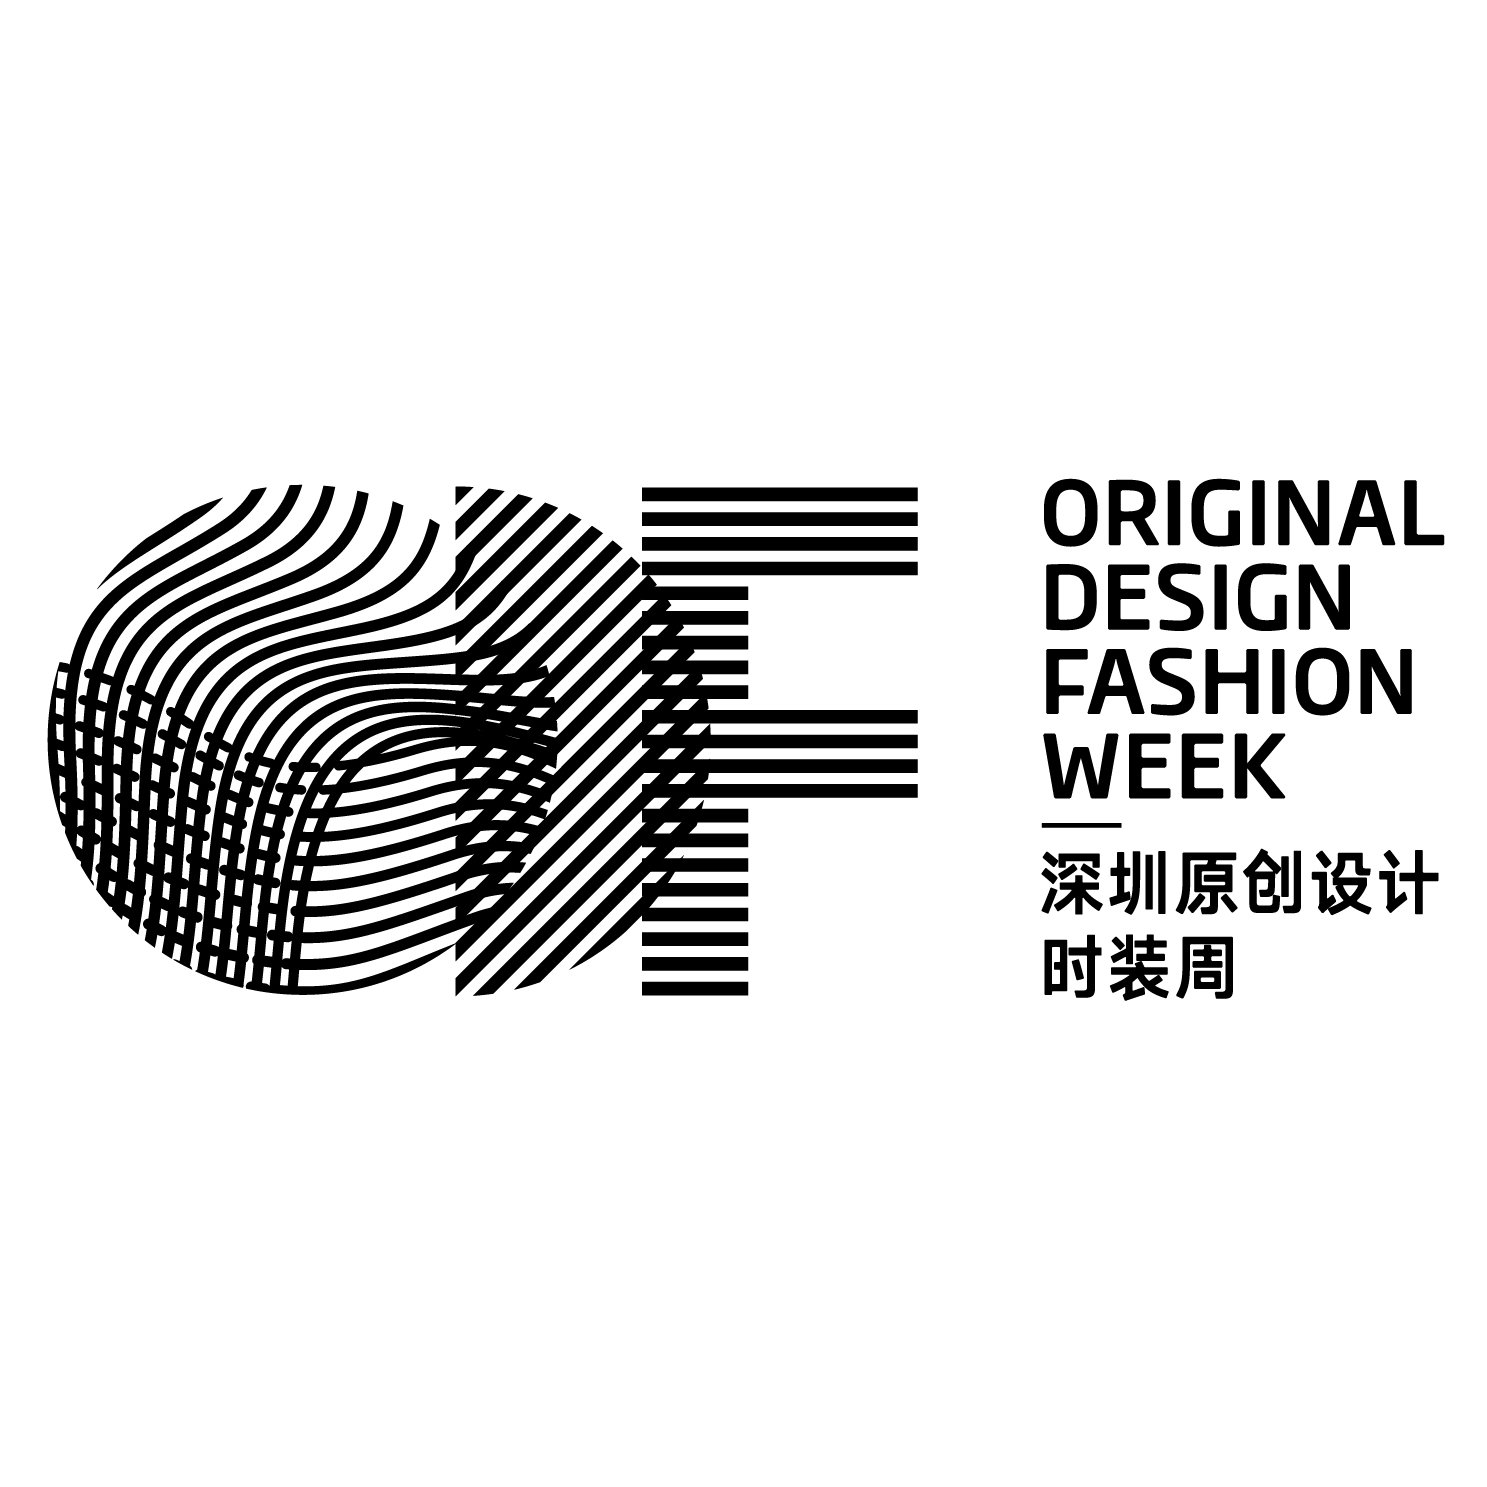 Original Design Fashion Week Shenzhen CHINA